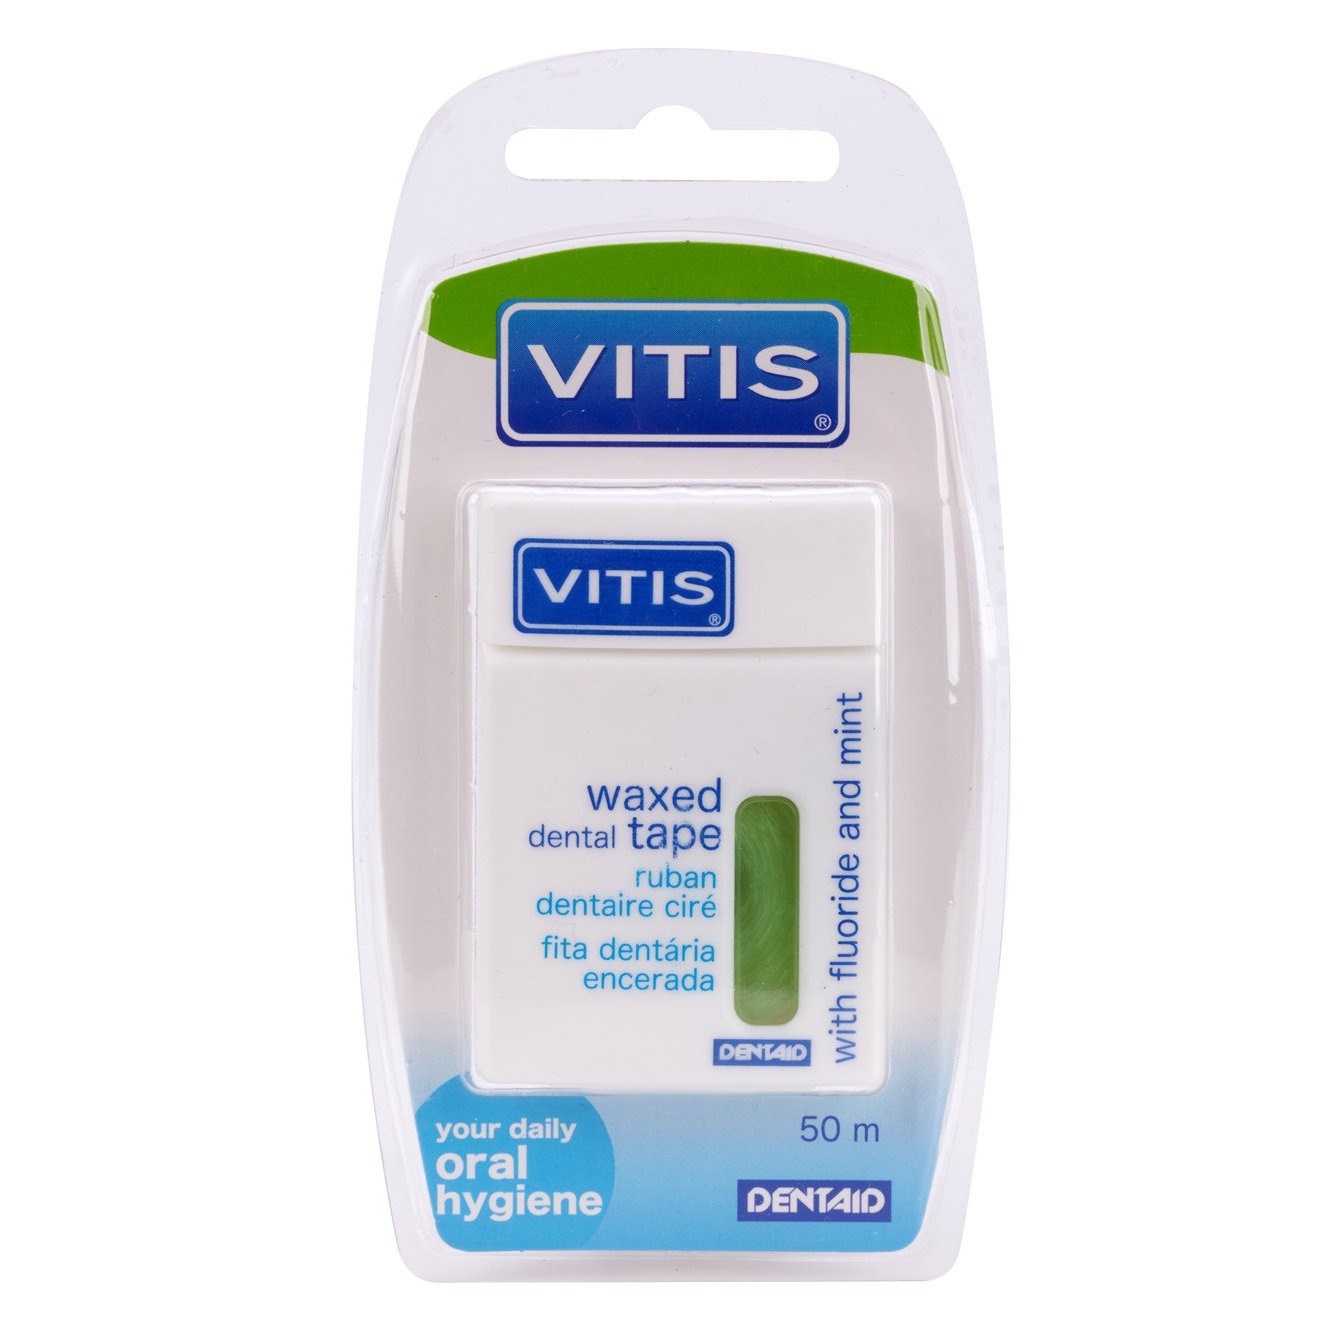 DENTAID Нить межзубная в твердой упаковке Vitis Waxed Dental Tape with Fluoride and Mint 50 м parisa cosmetics набор теней для век ghost tape